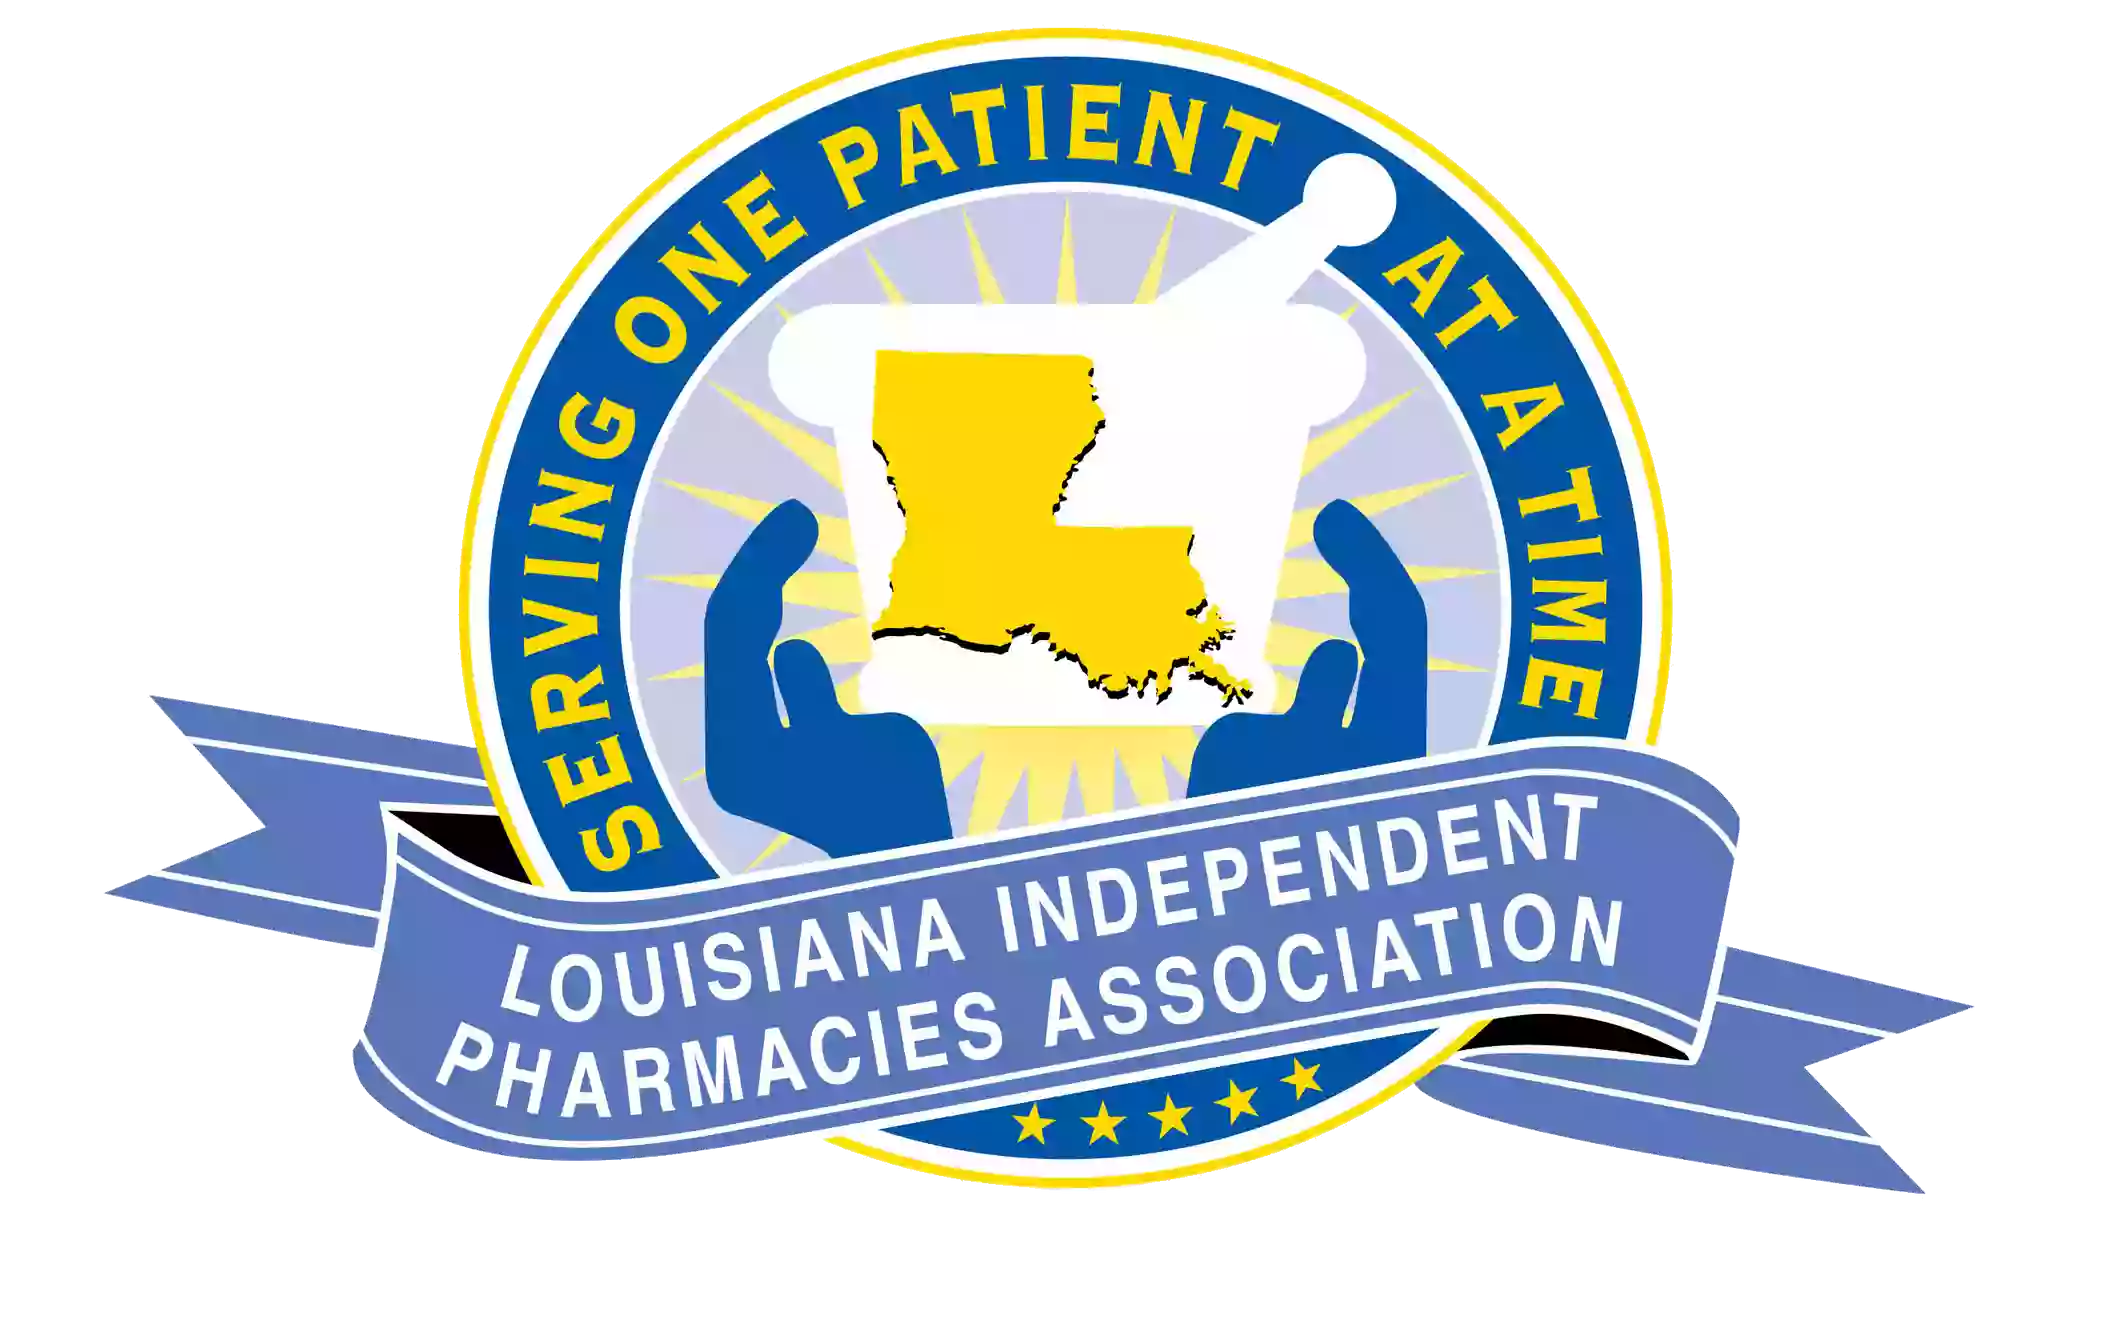 Louisiana Independent Pharmacies Association (LIPA)